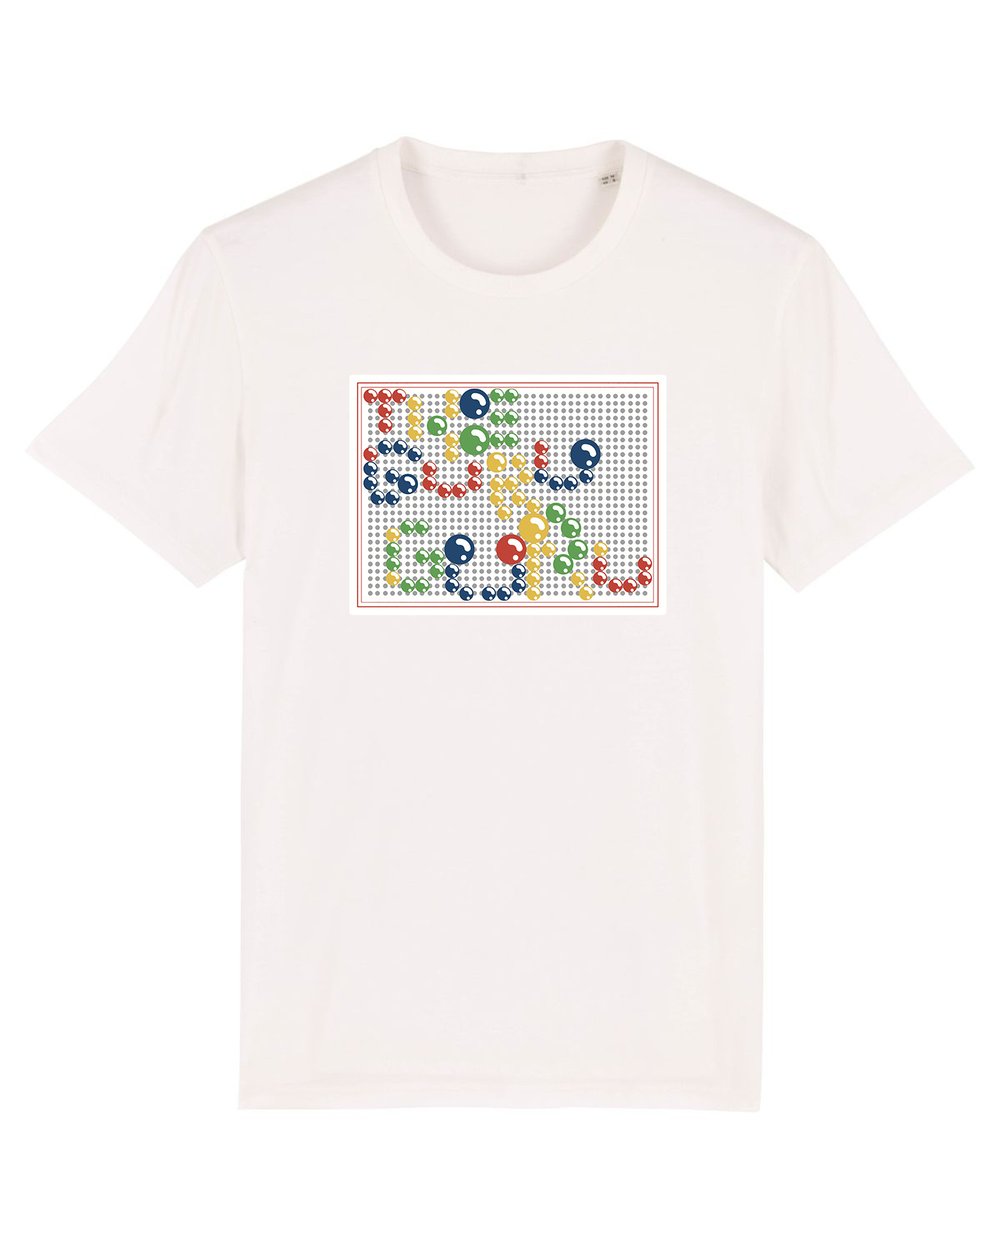 Image of White t-shirt 'Make (Less) Babies' Mosaic toy print